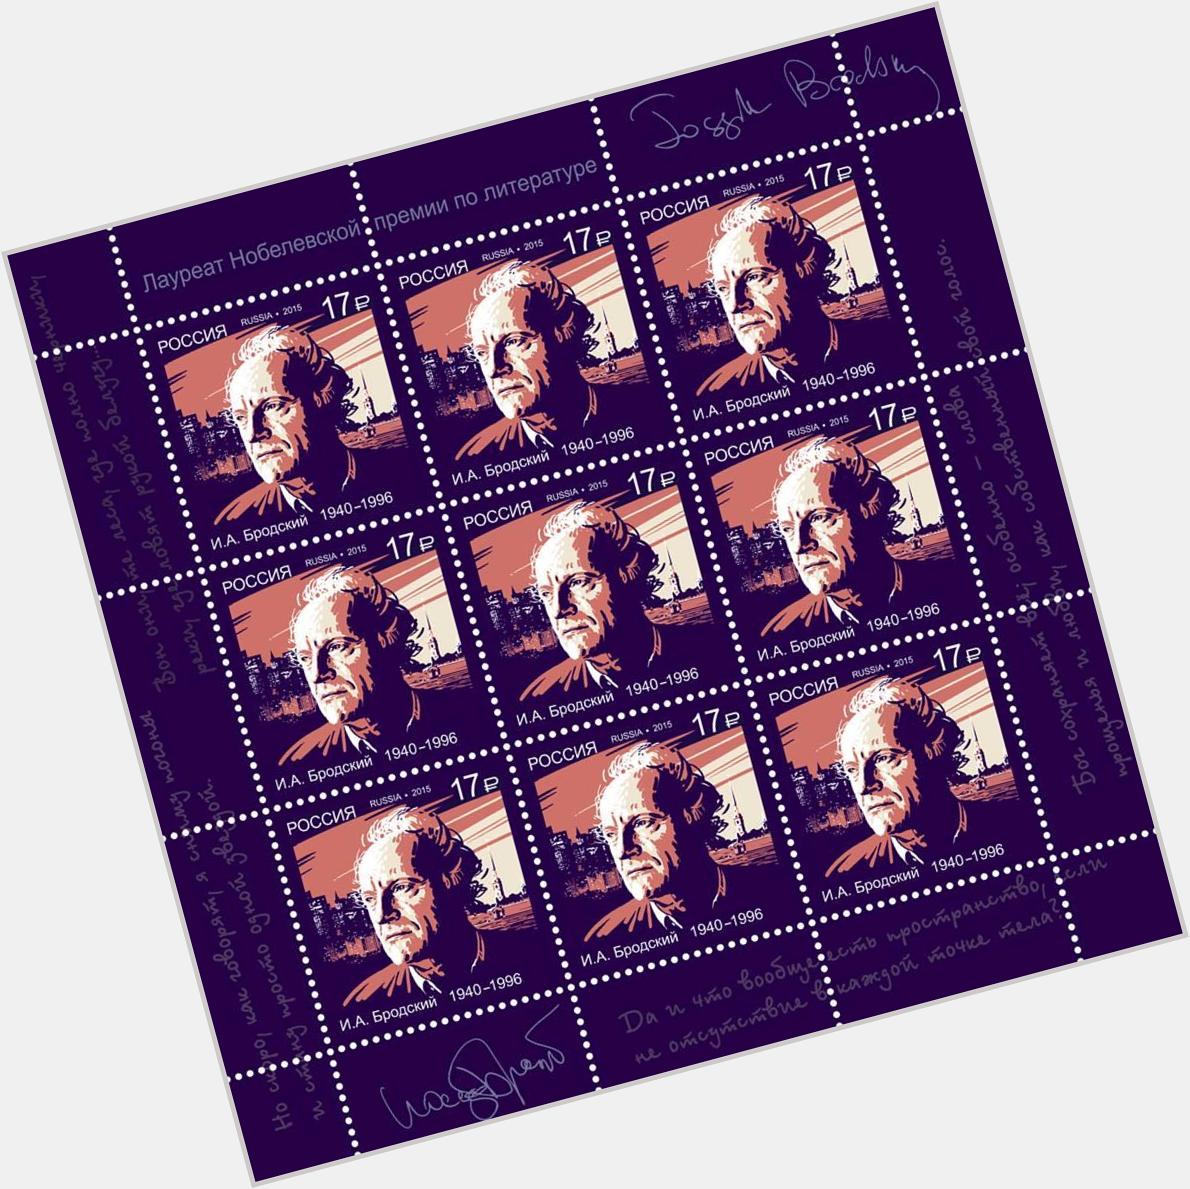 Happy Birthday Joseph Brodsky (5/24)! Mary Jo Salter contemplates Russia\s new Brodsky stamp  